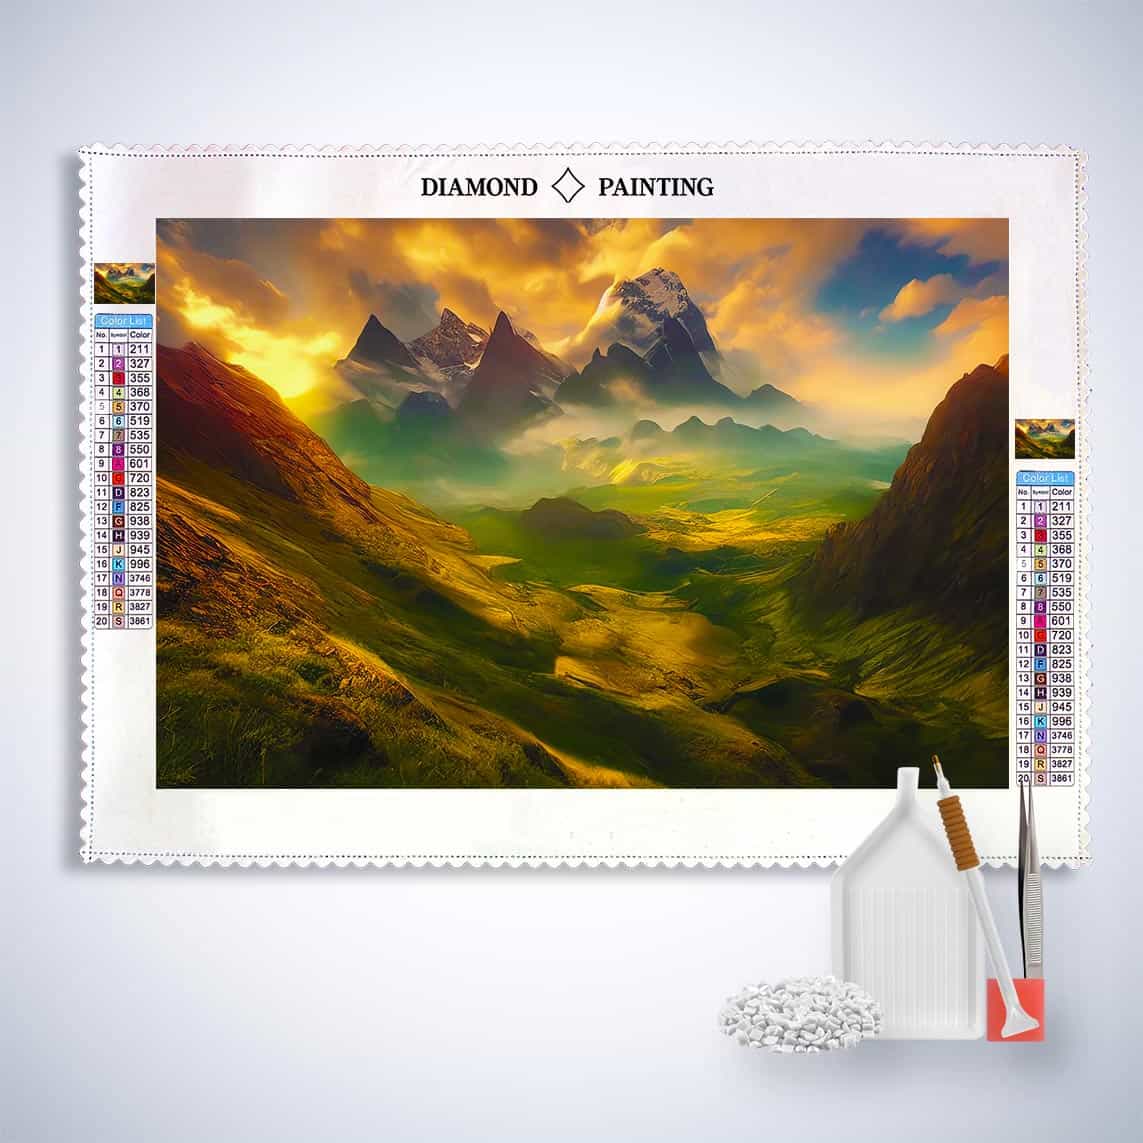 Diamond Painting - Berge und Wolken - gedruckt in Ultra-HD - Berge, Horizontal, Landschaft